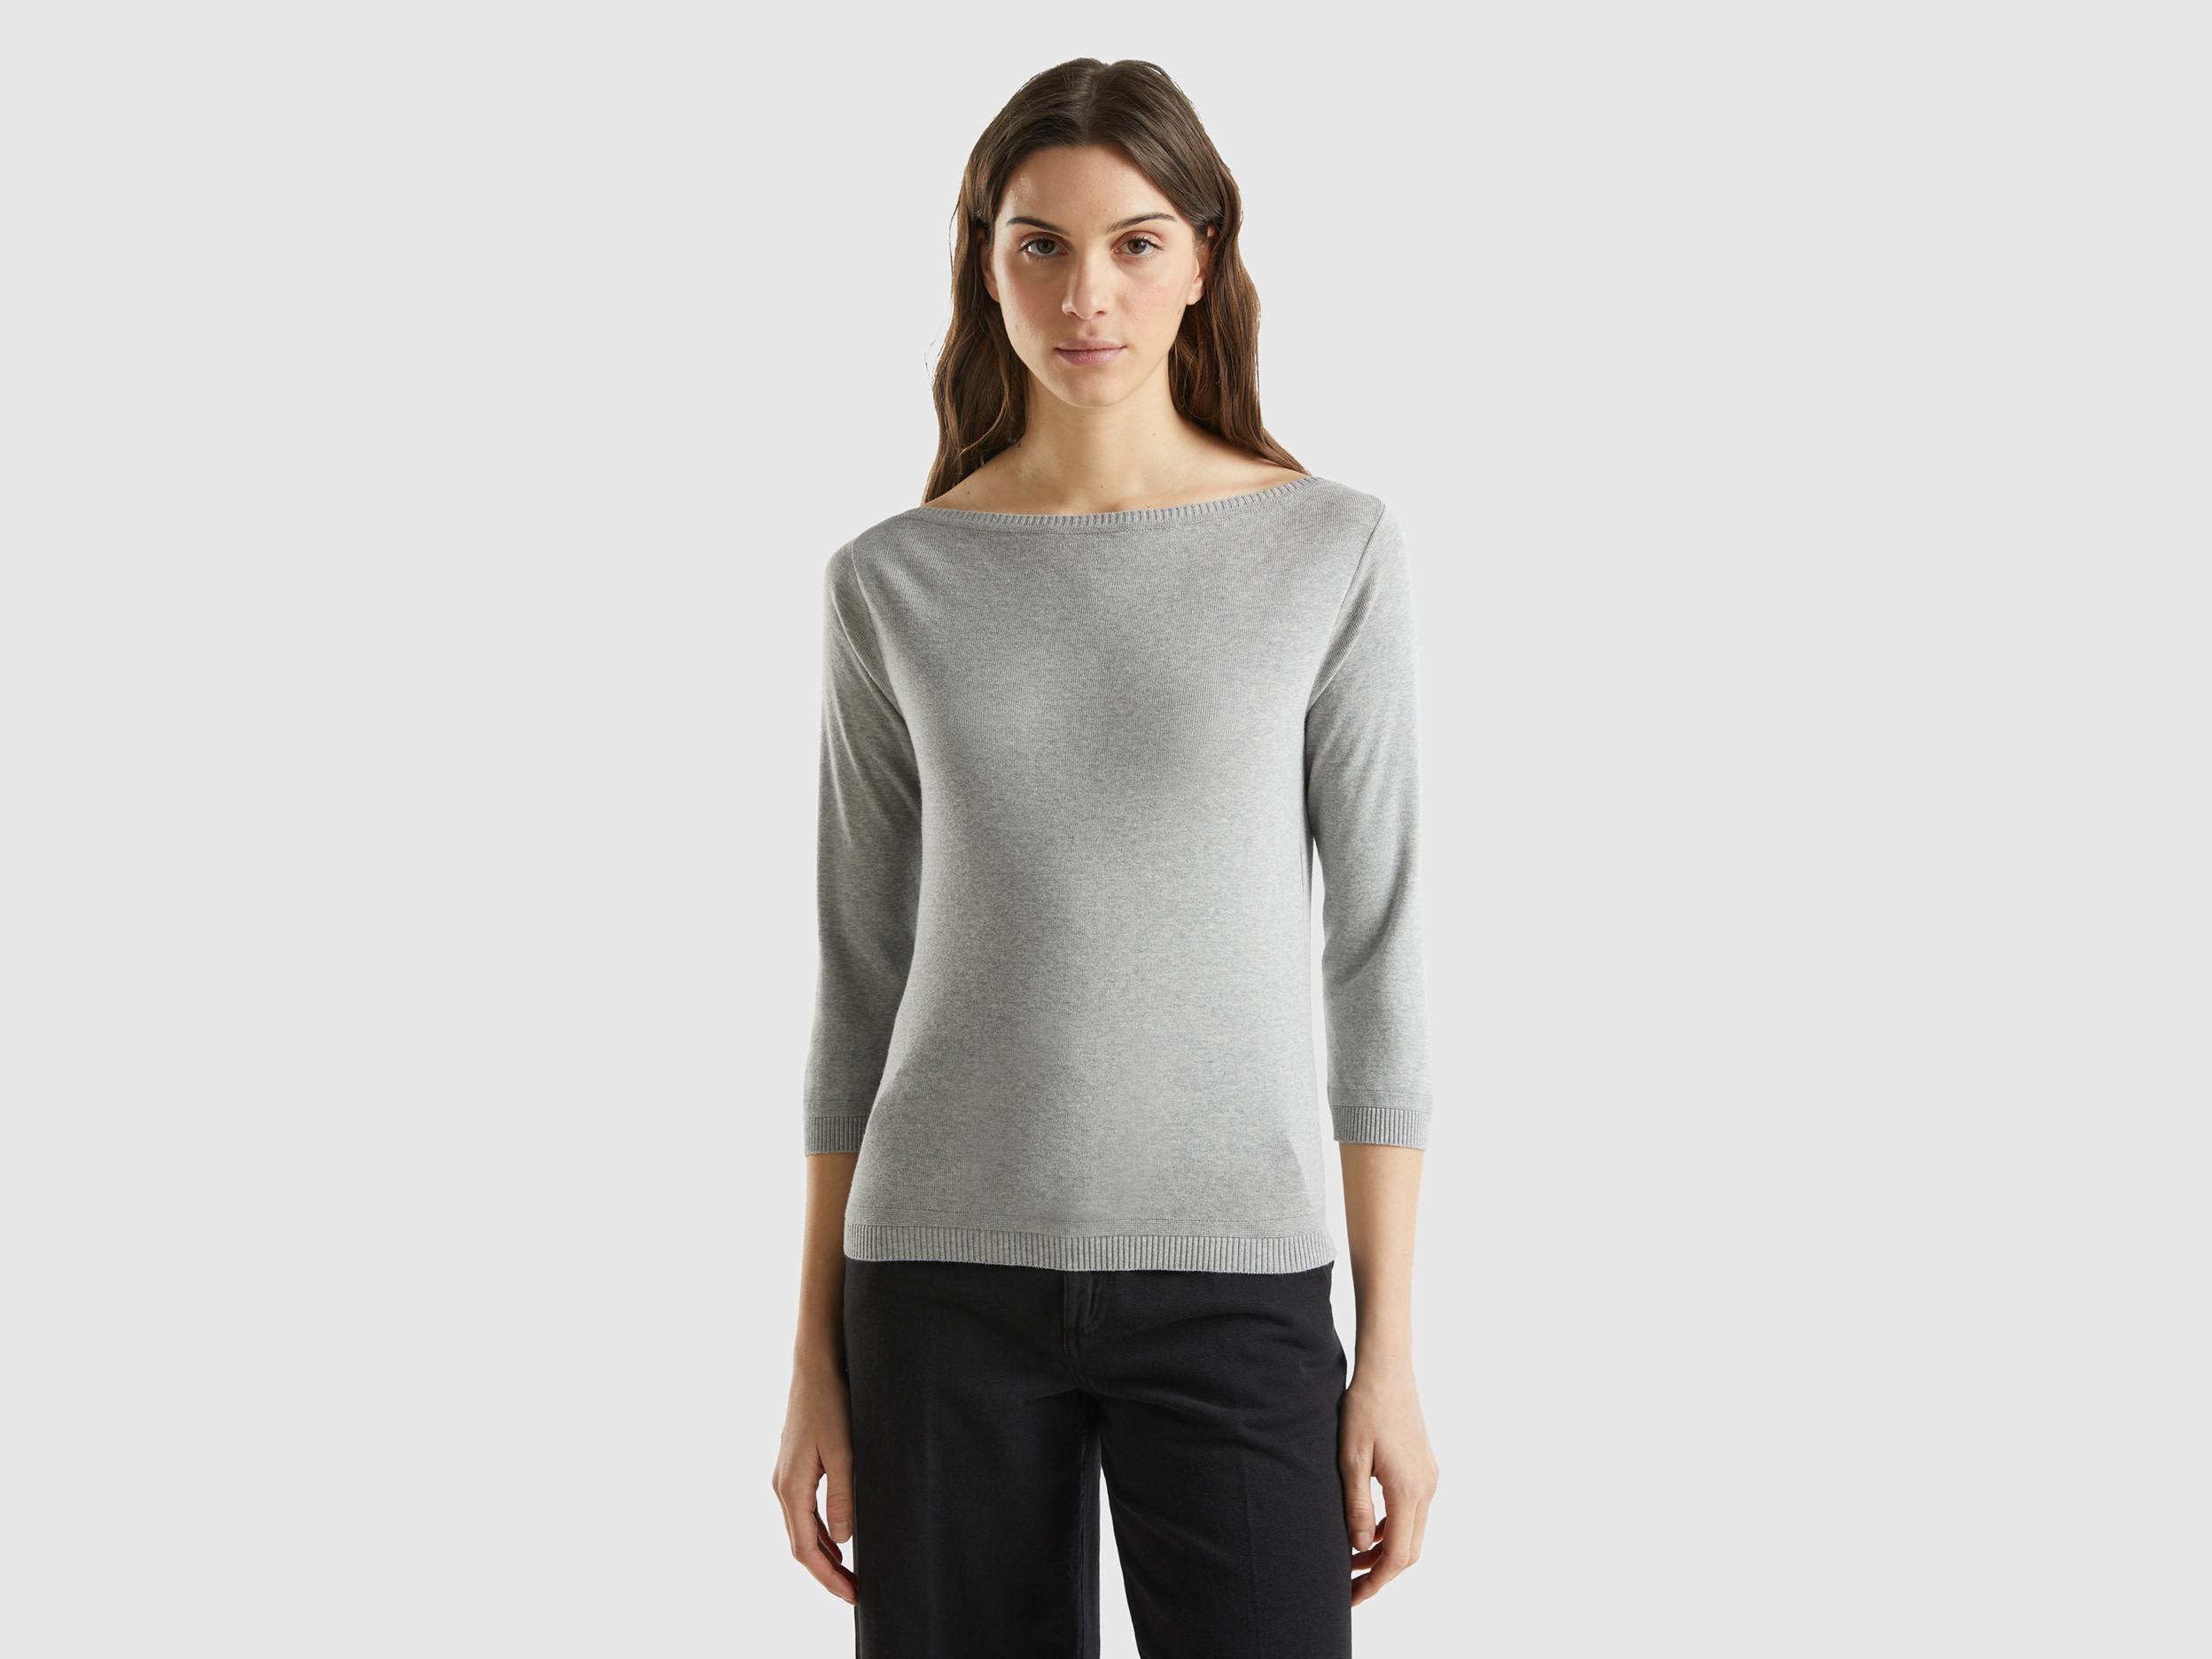 Benetton Online exclusive, 100% Cotton Boat Neck Sweater, size XS, Light Gray, Women